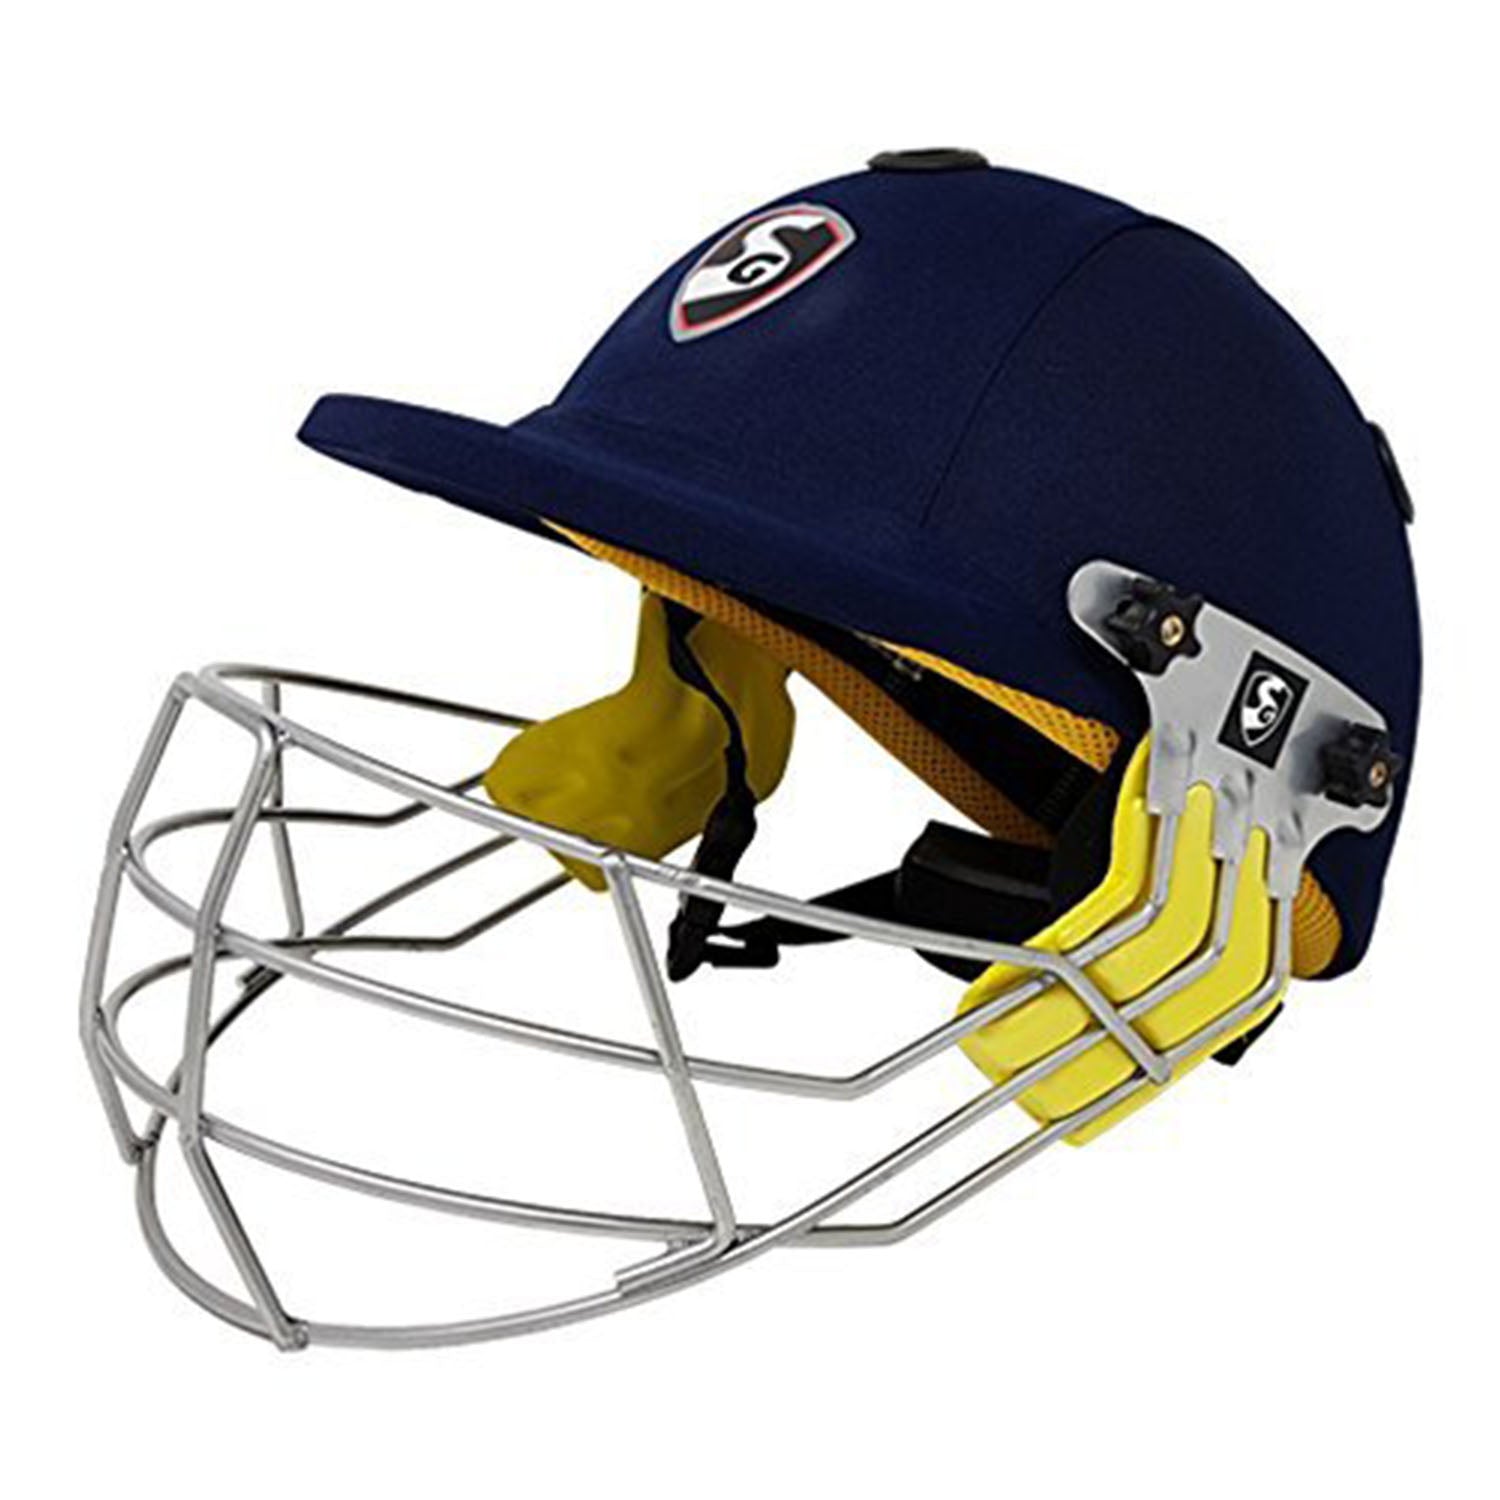 SG Smart Cricket Helmet - Best Price online Prokicksports.com